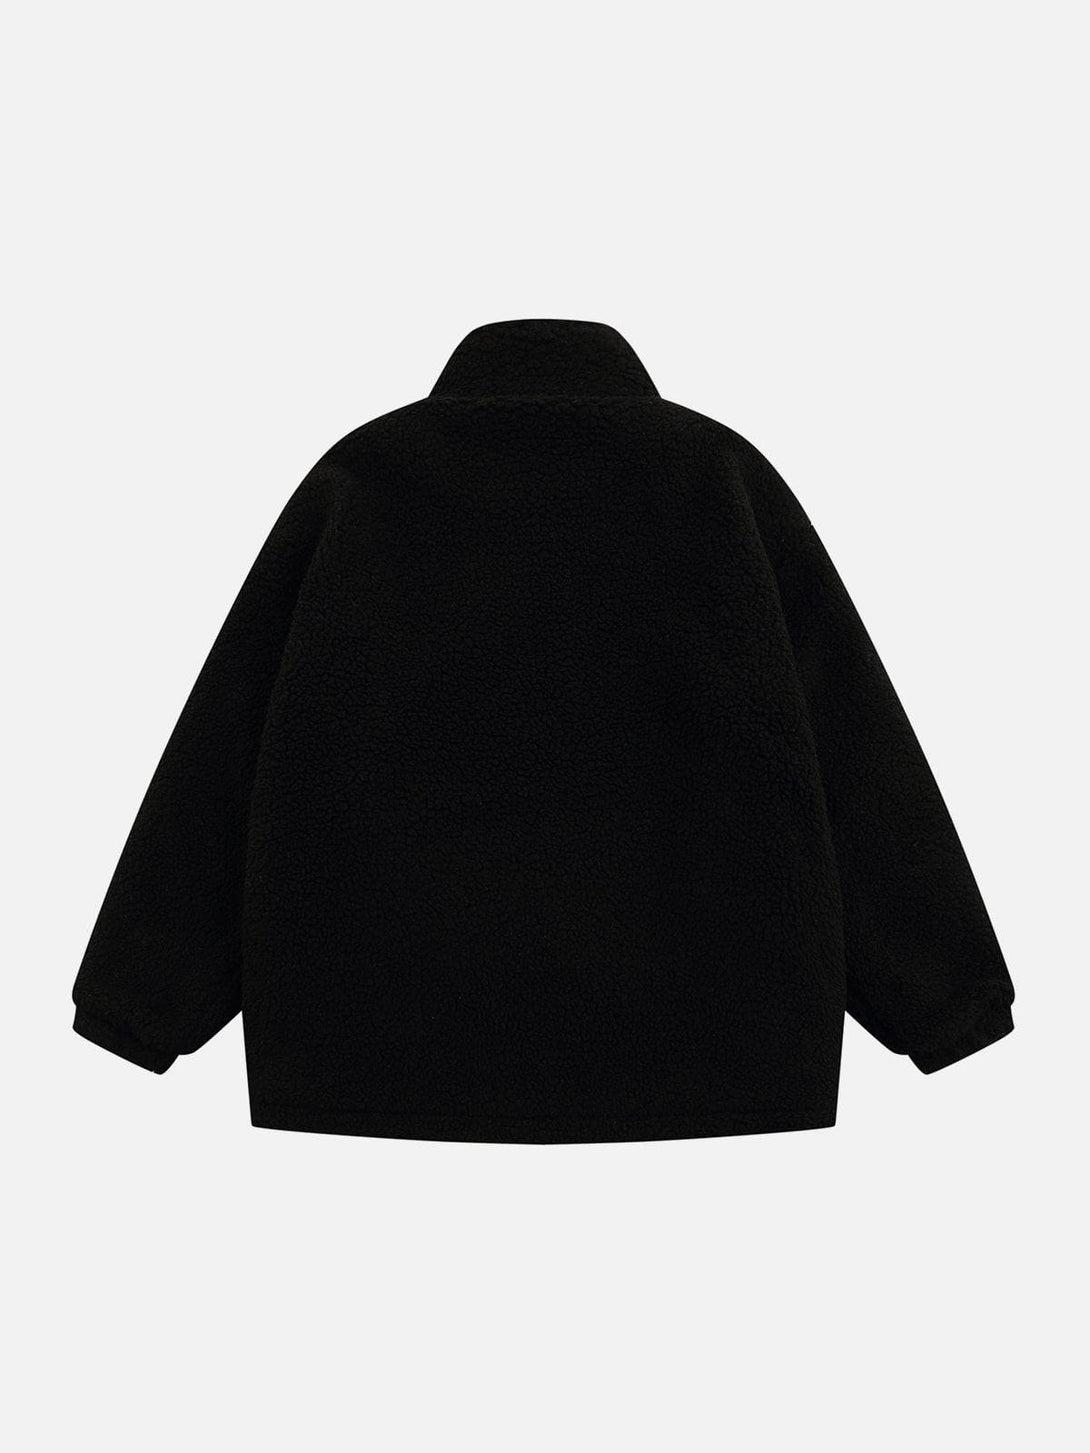 Majesda® - Embroidered Plush Bear Sherpa Coat outfit ideas streetwear fashion